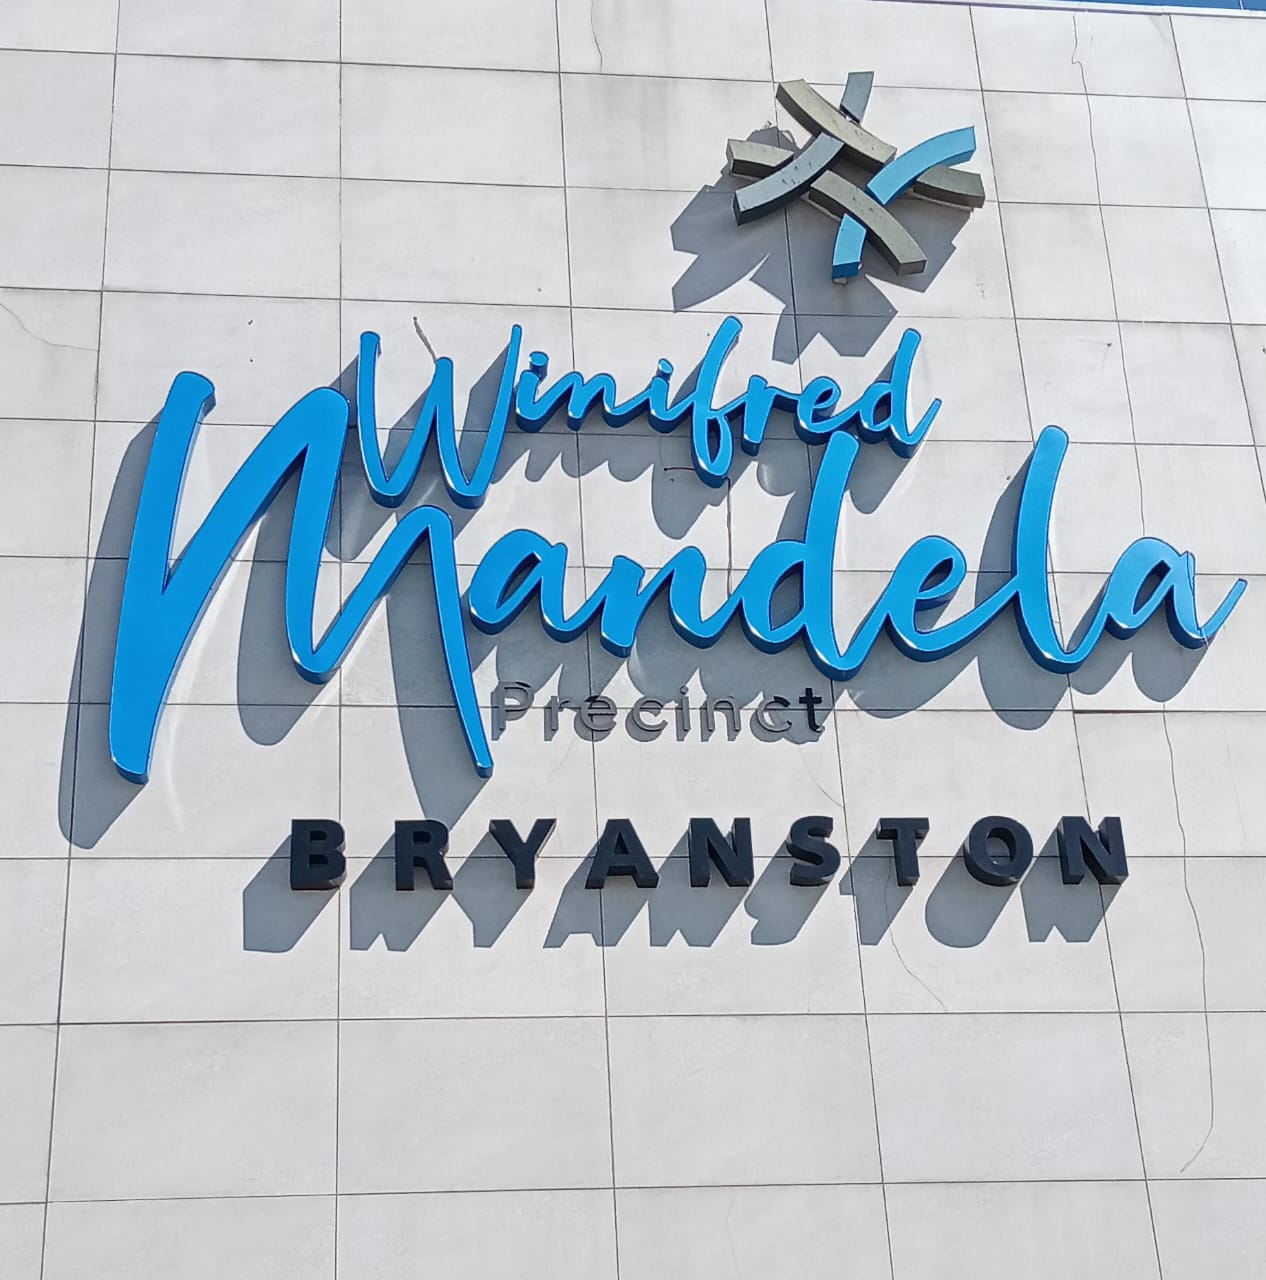 Transformation In Johannesburg: Nicolway Centre Becomes Winifred Mandela Precinct 3